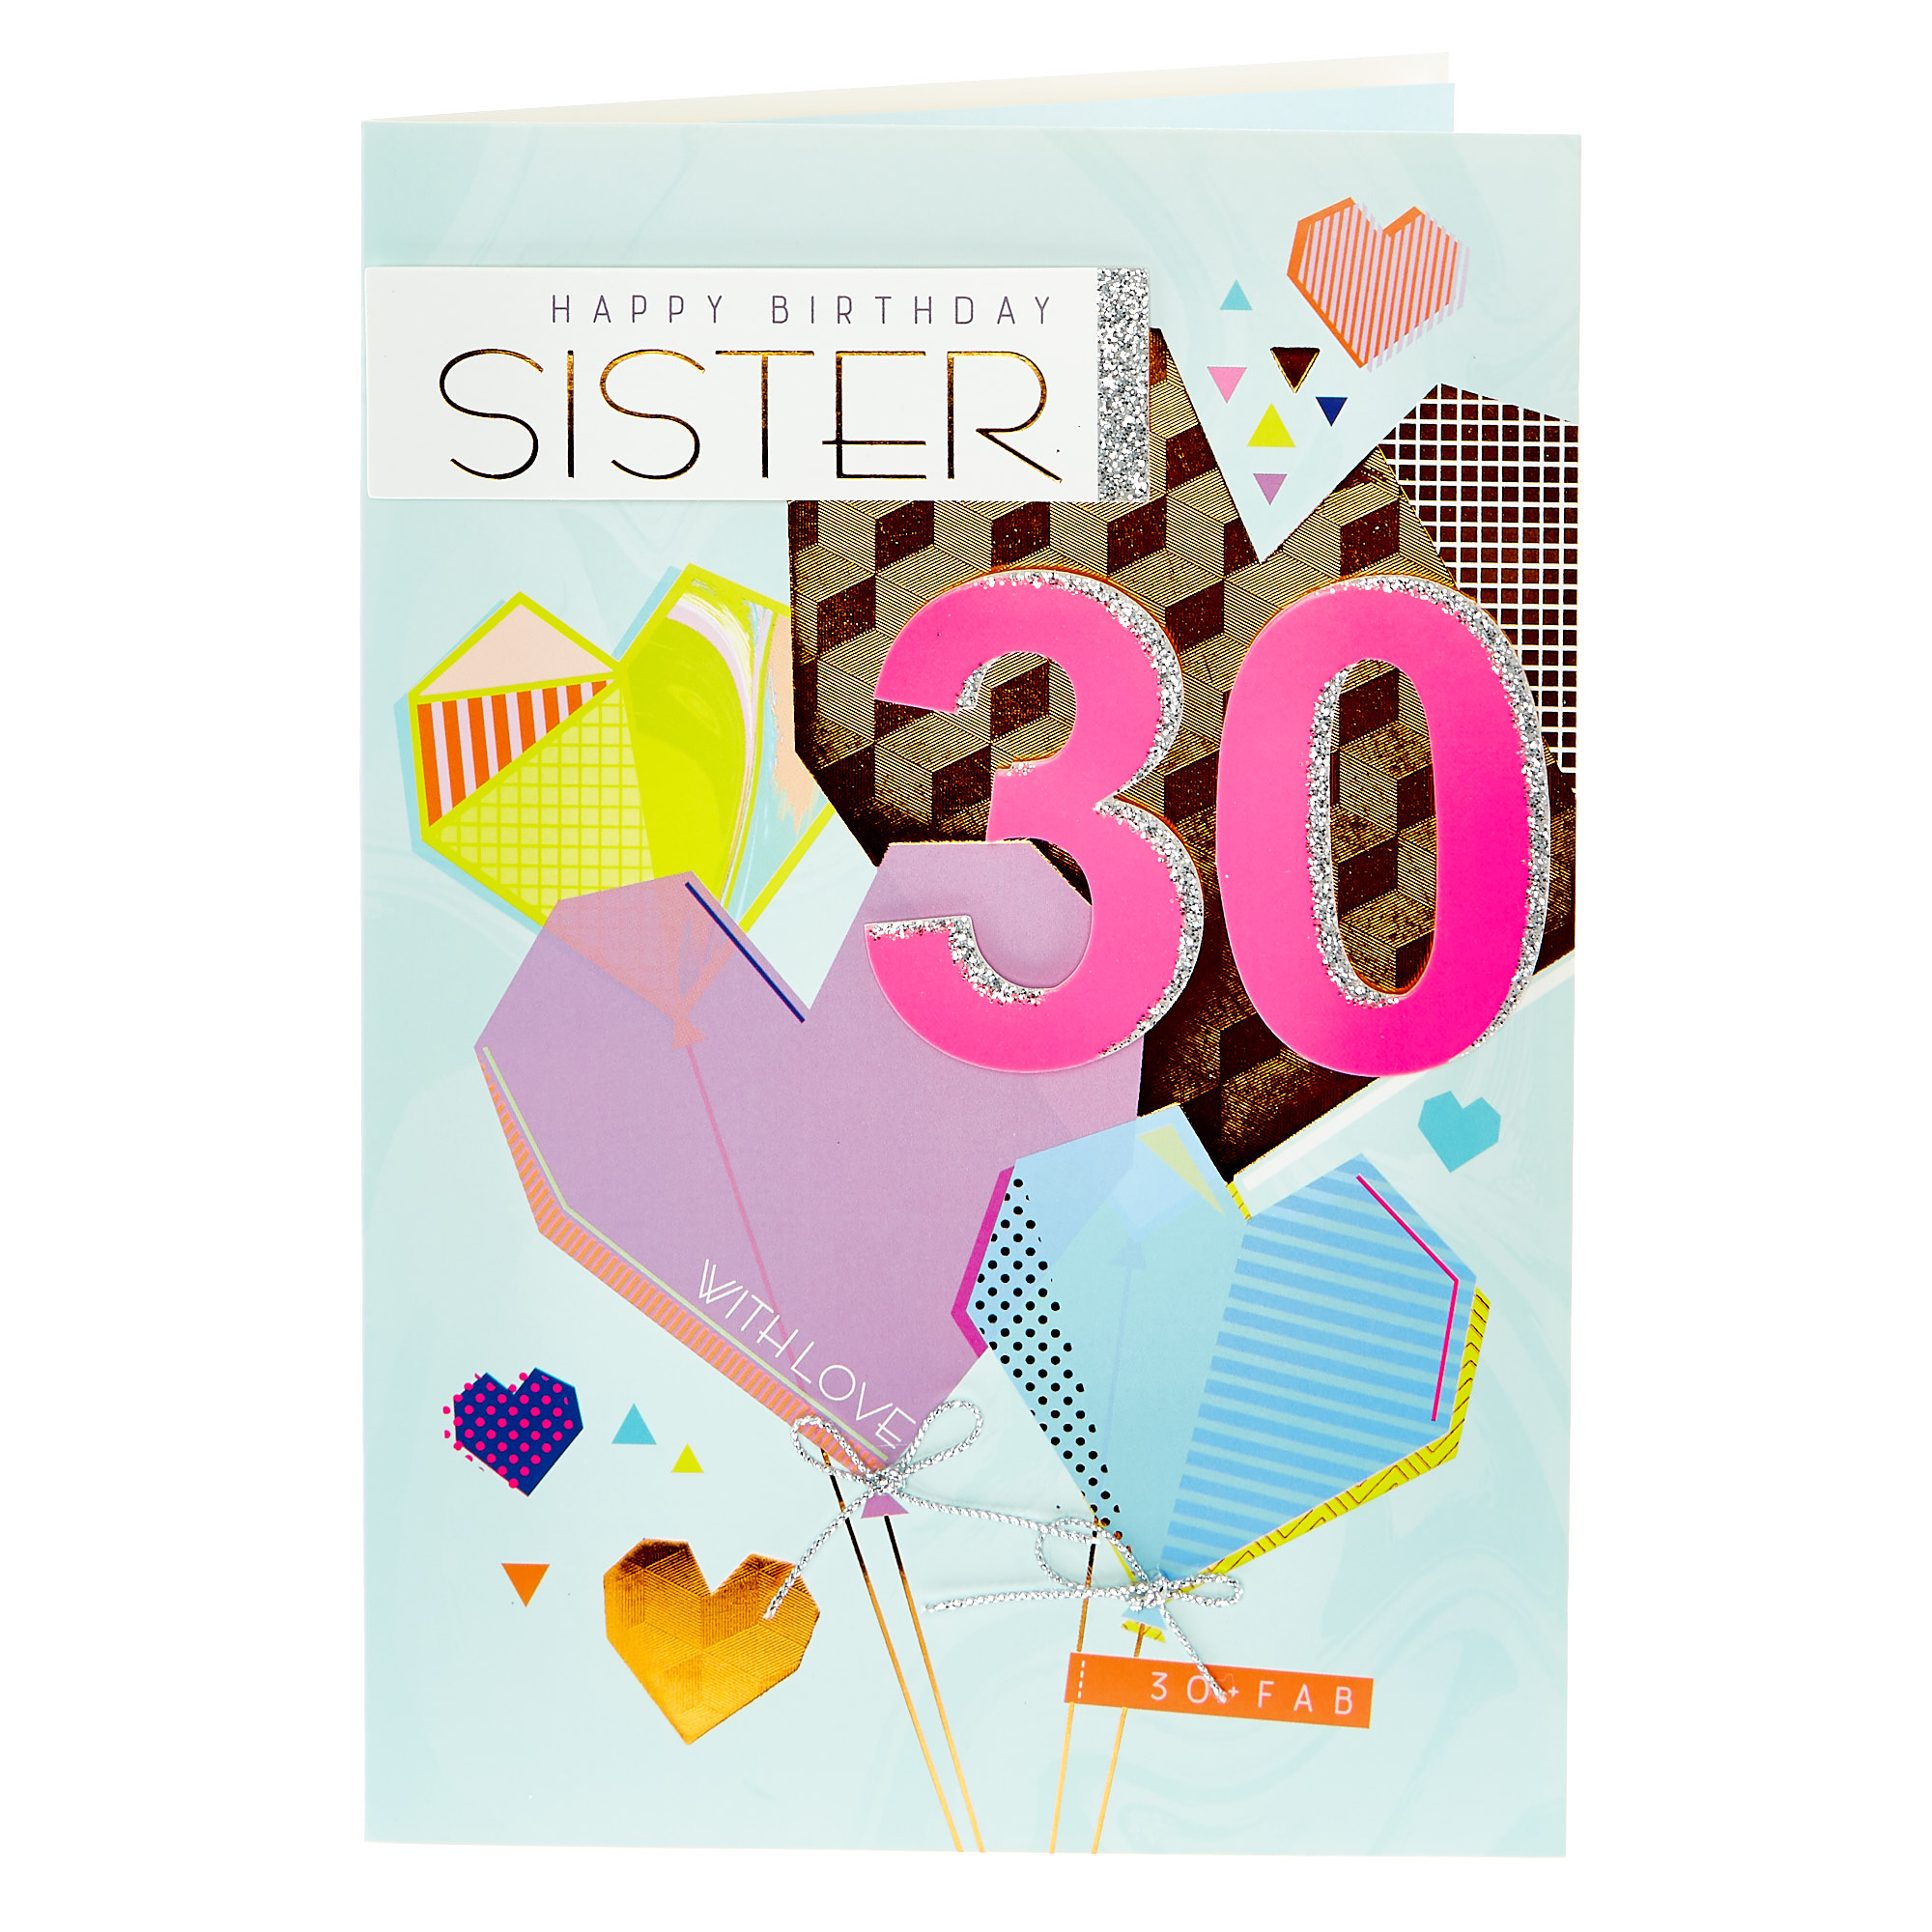 30th Birthday Card - Sister, Geometric Hearts